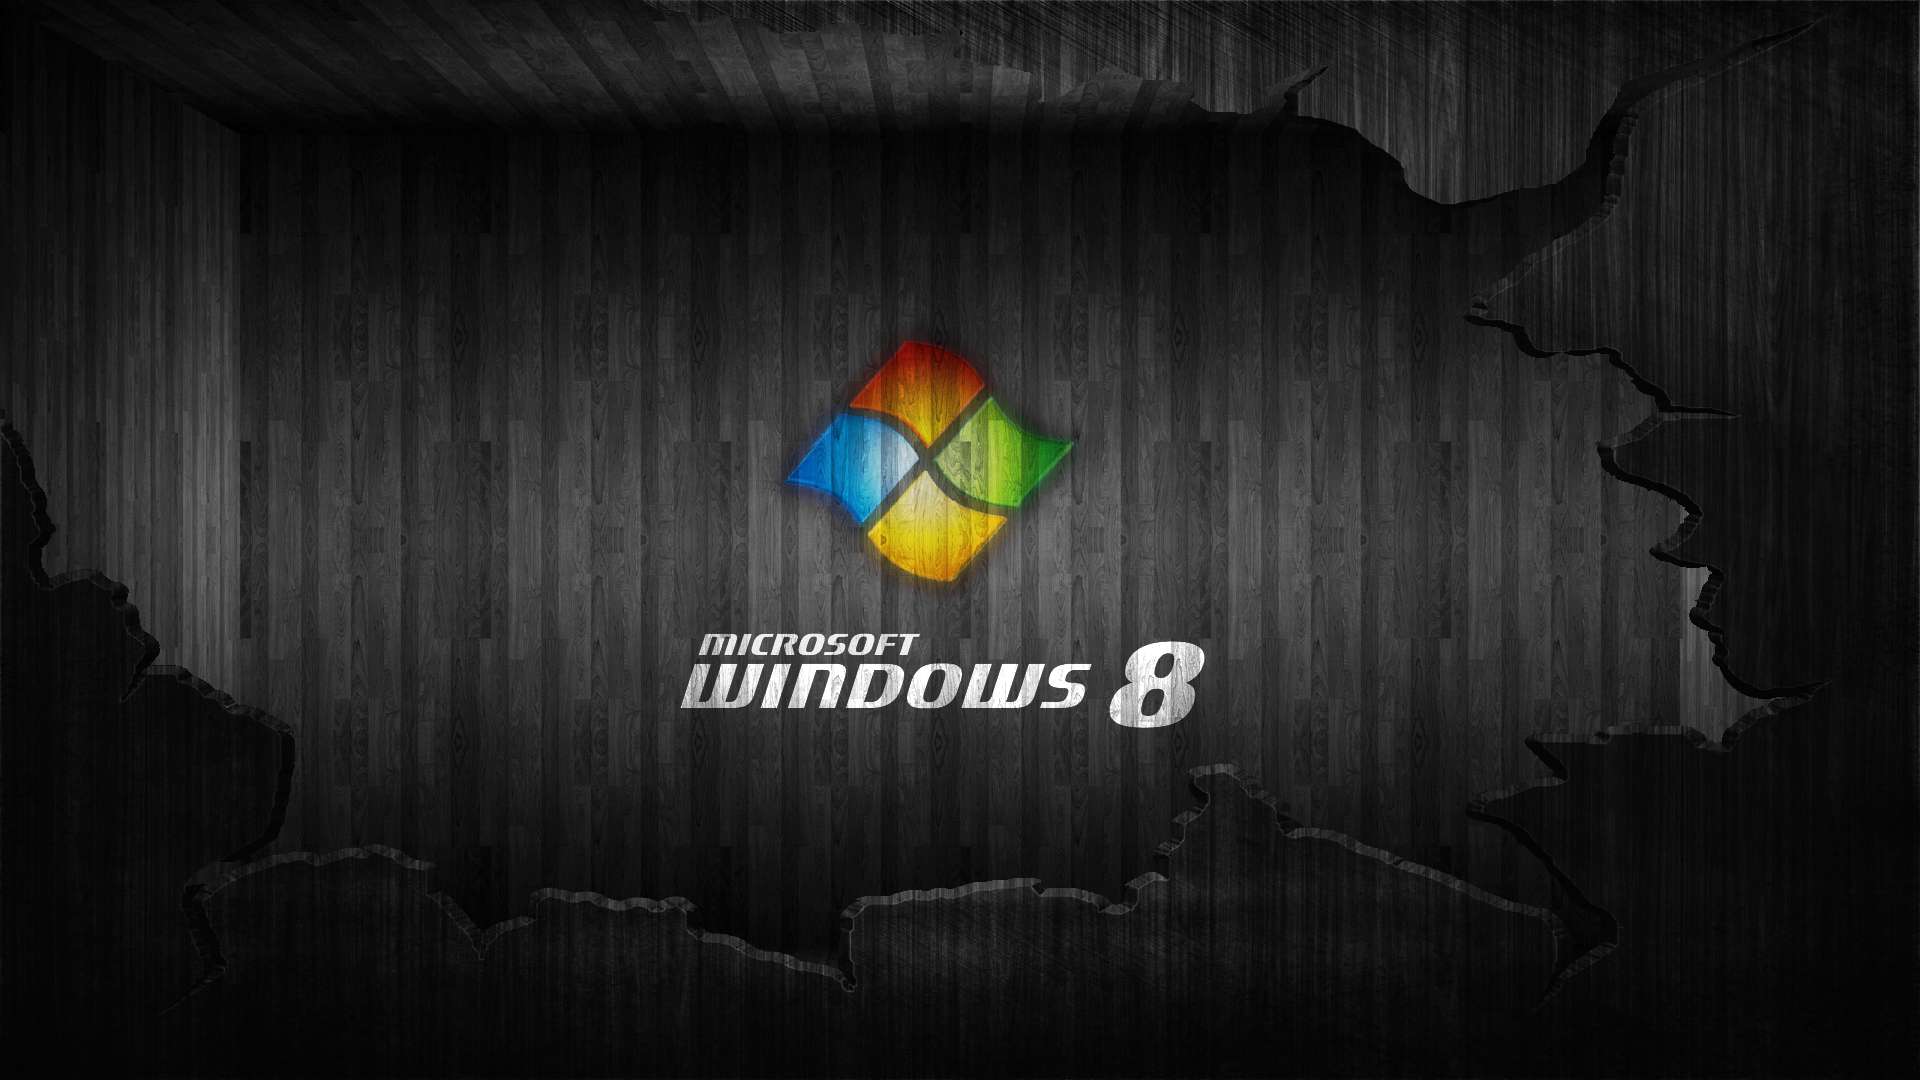 20 Widescreen HD Wallpapers For Windows 8 Desktop Background 1920x1080